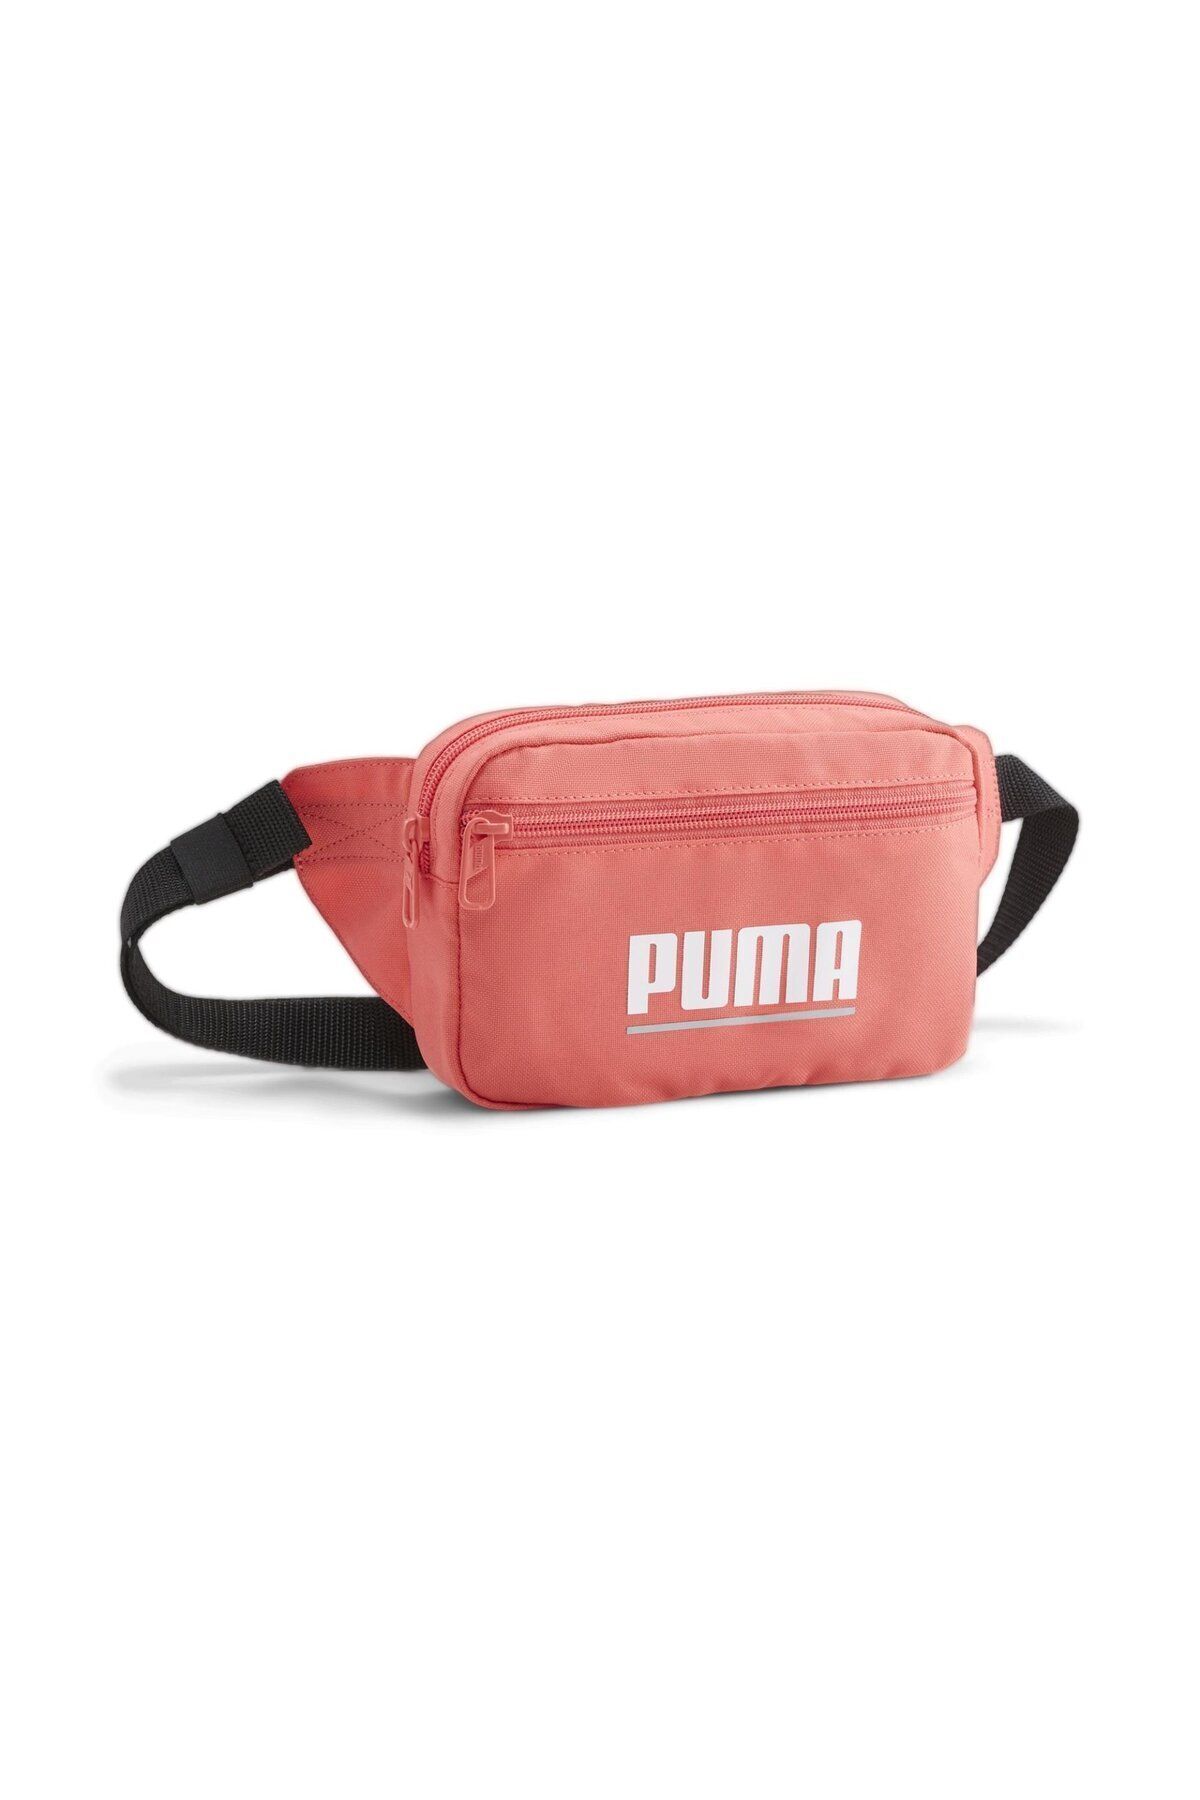 Puma Plus Waist Bag Kadın Bel Çantası-Pembe 07961406